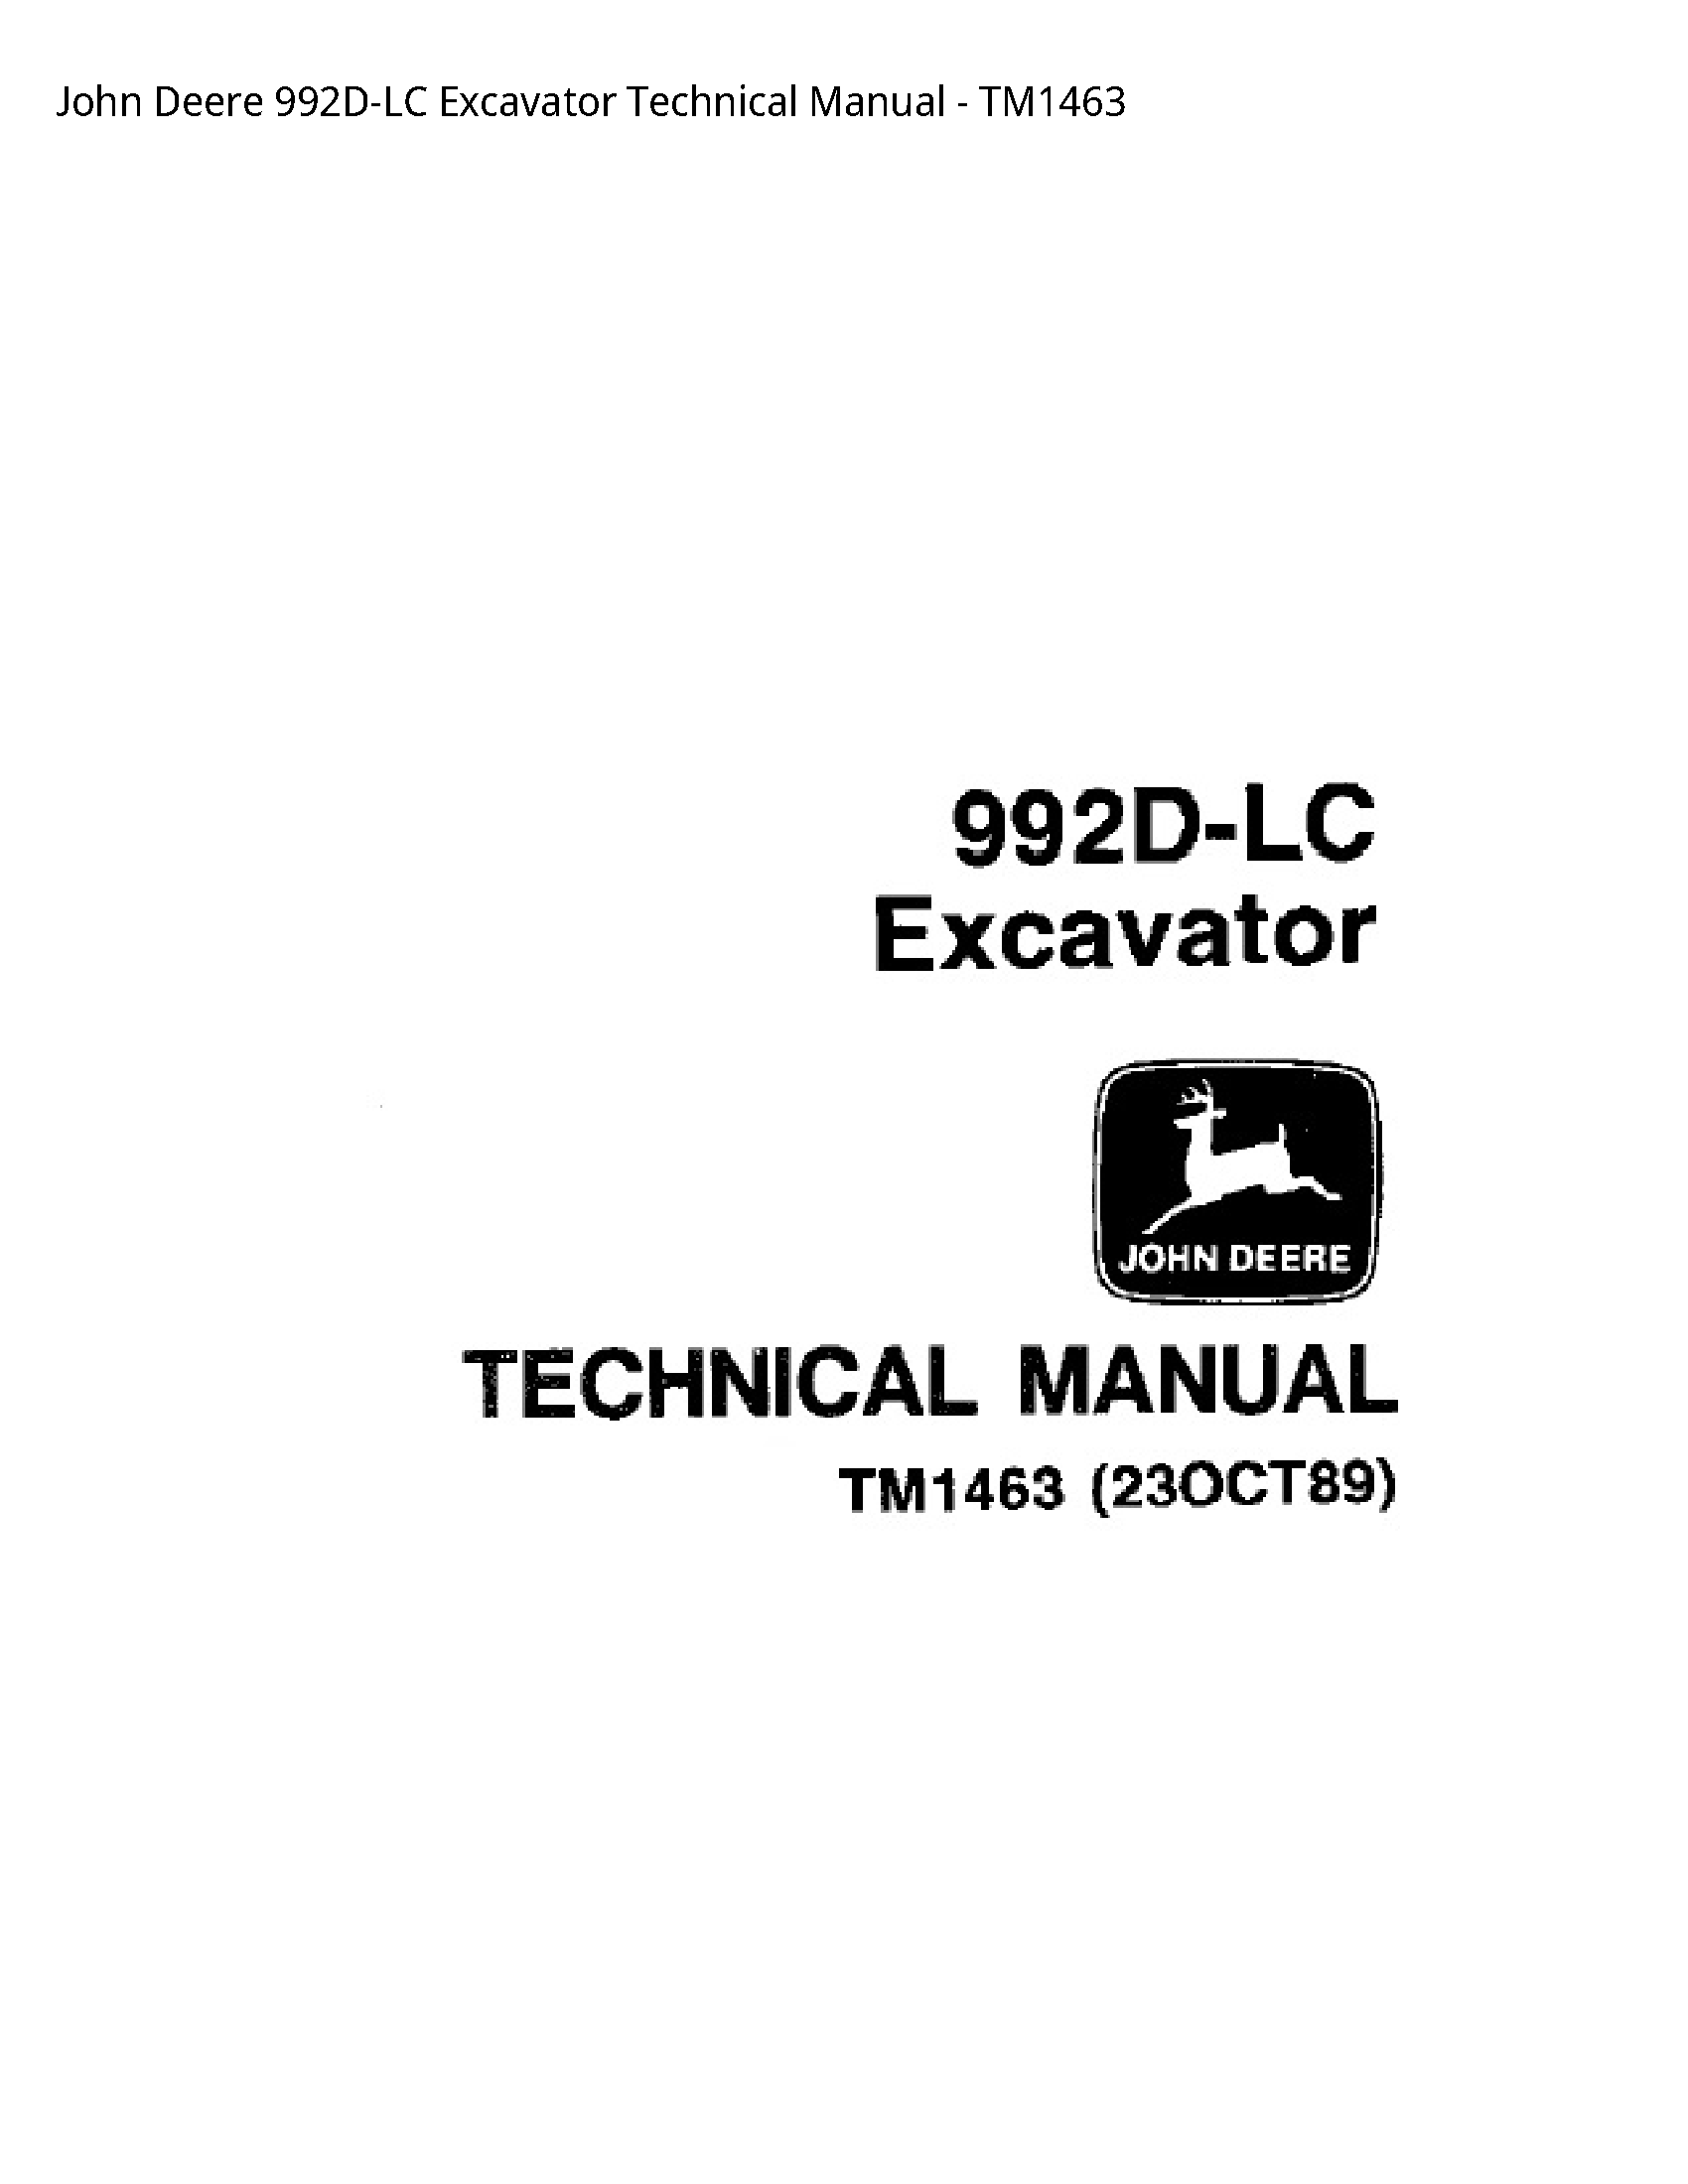 John Deere 992D-LC Excavator Technical manual